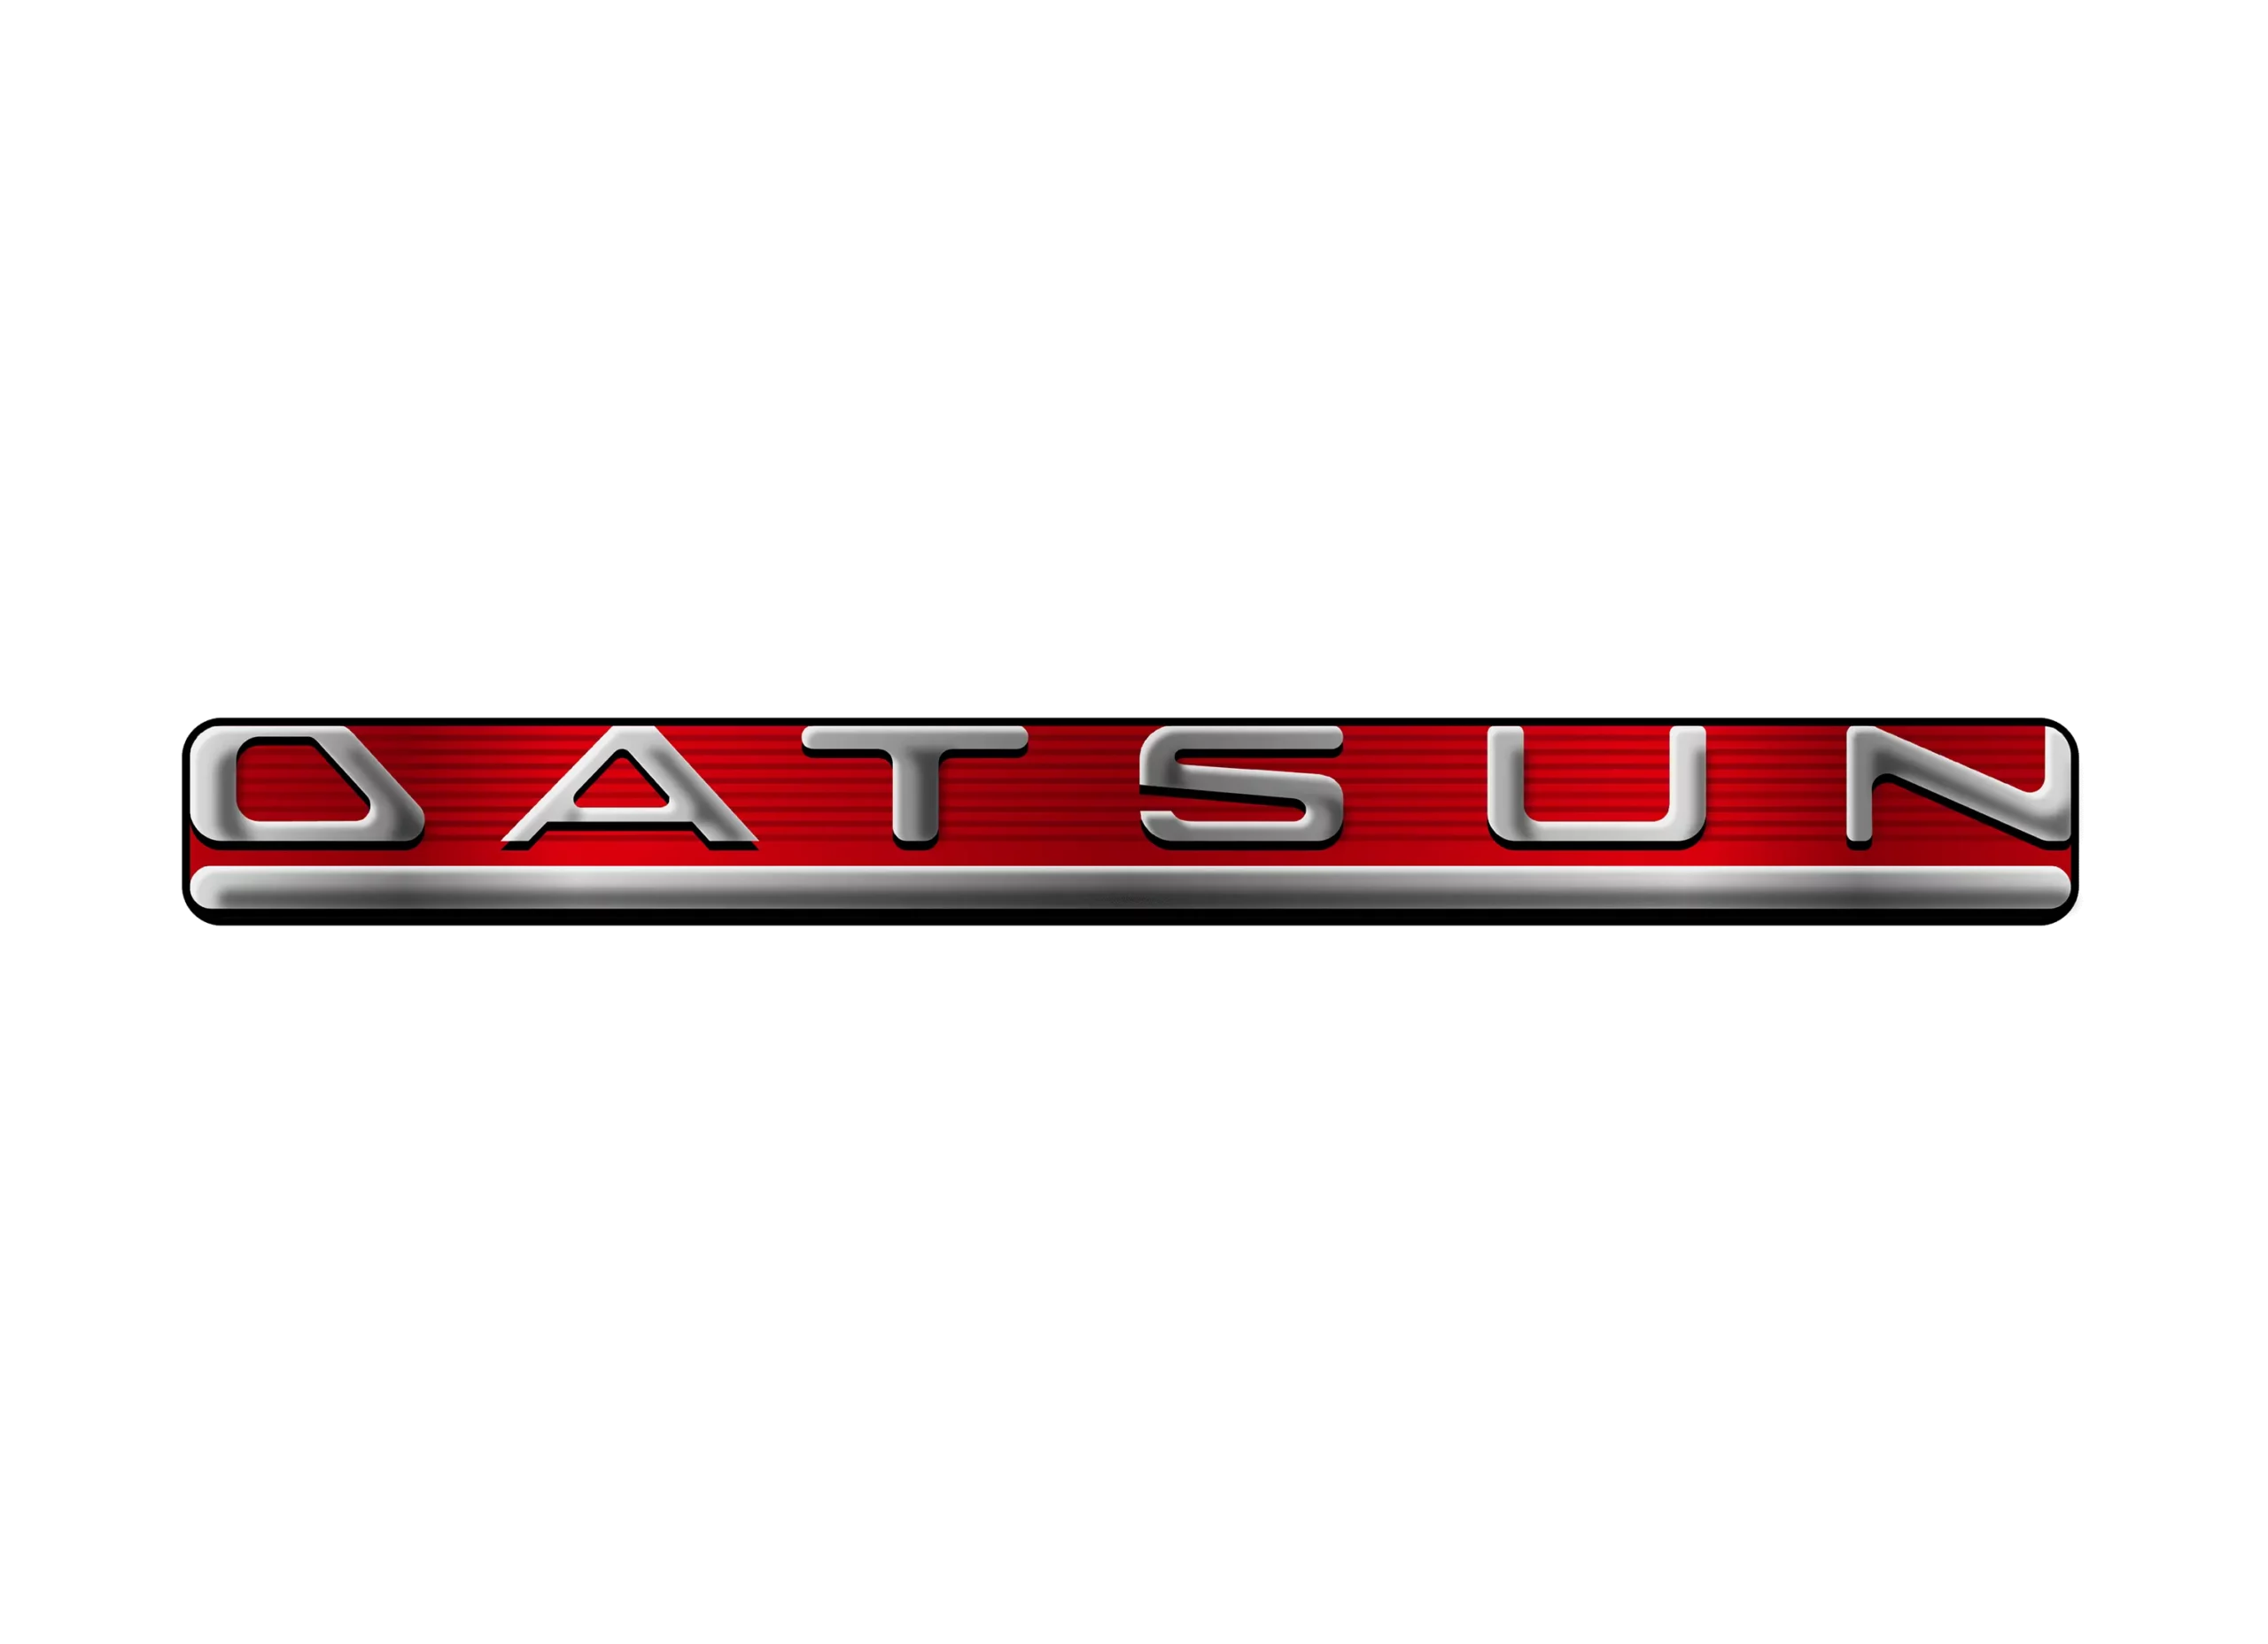 Datsun logo 1951-1963